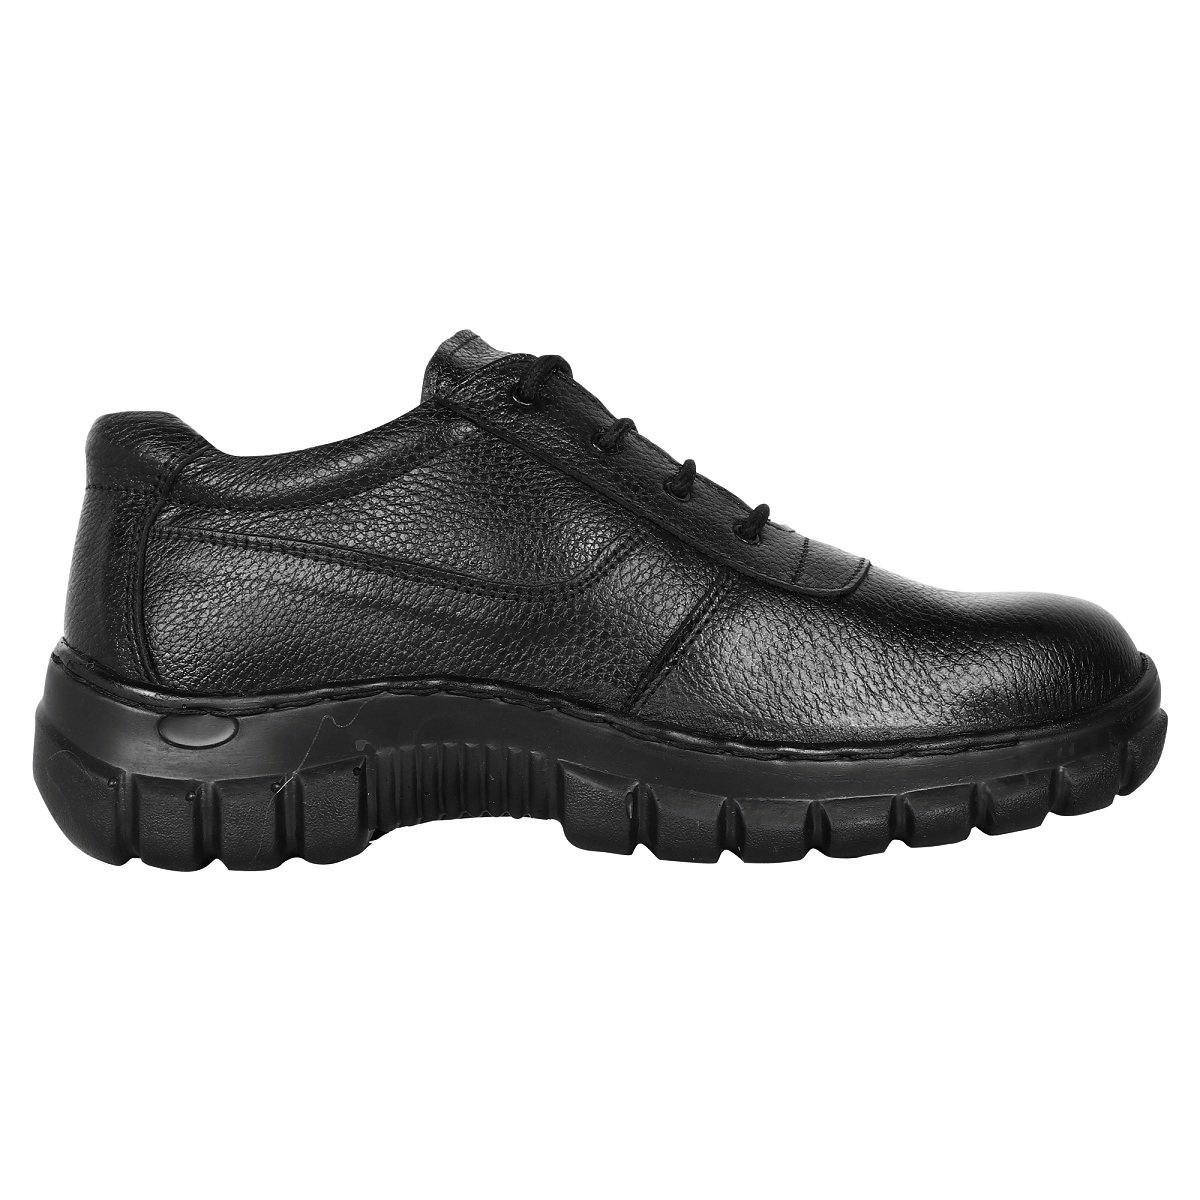 leather Shoes for Men ( Steel Toe)- Minor Defect - SeeandWear